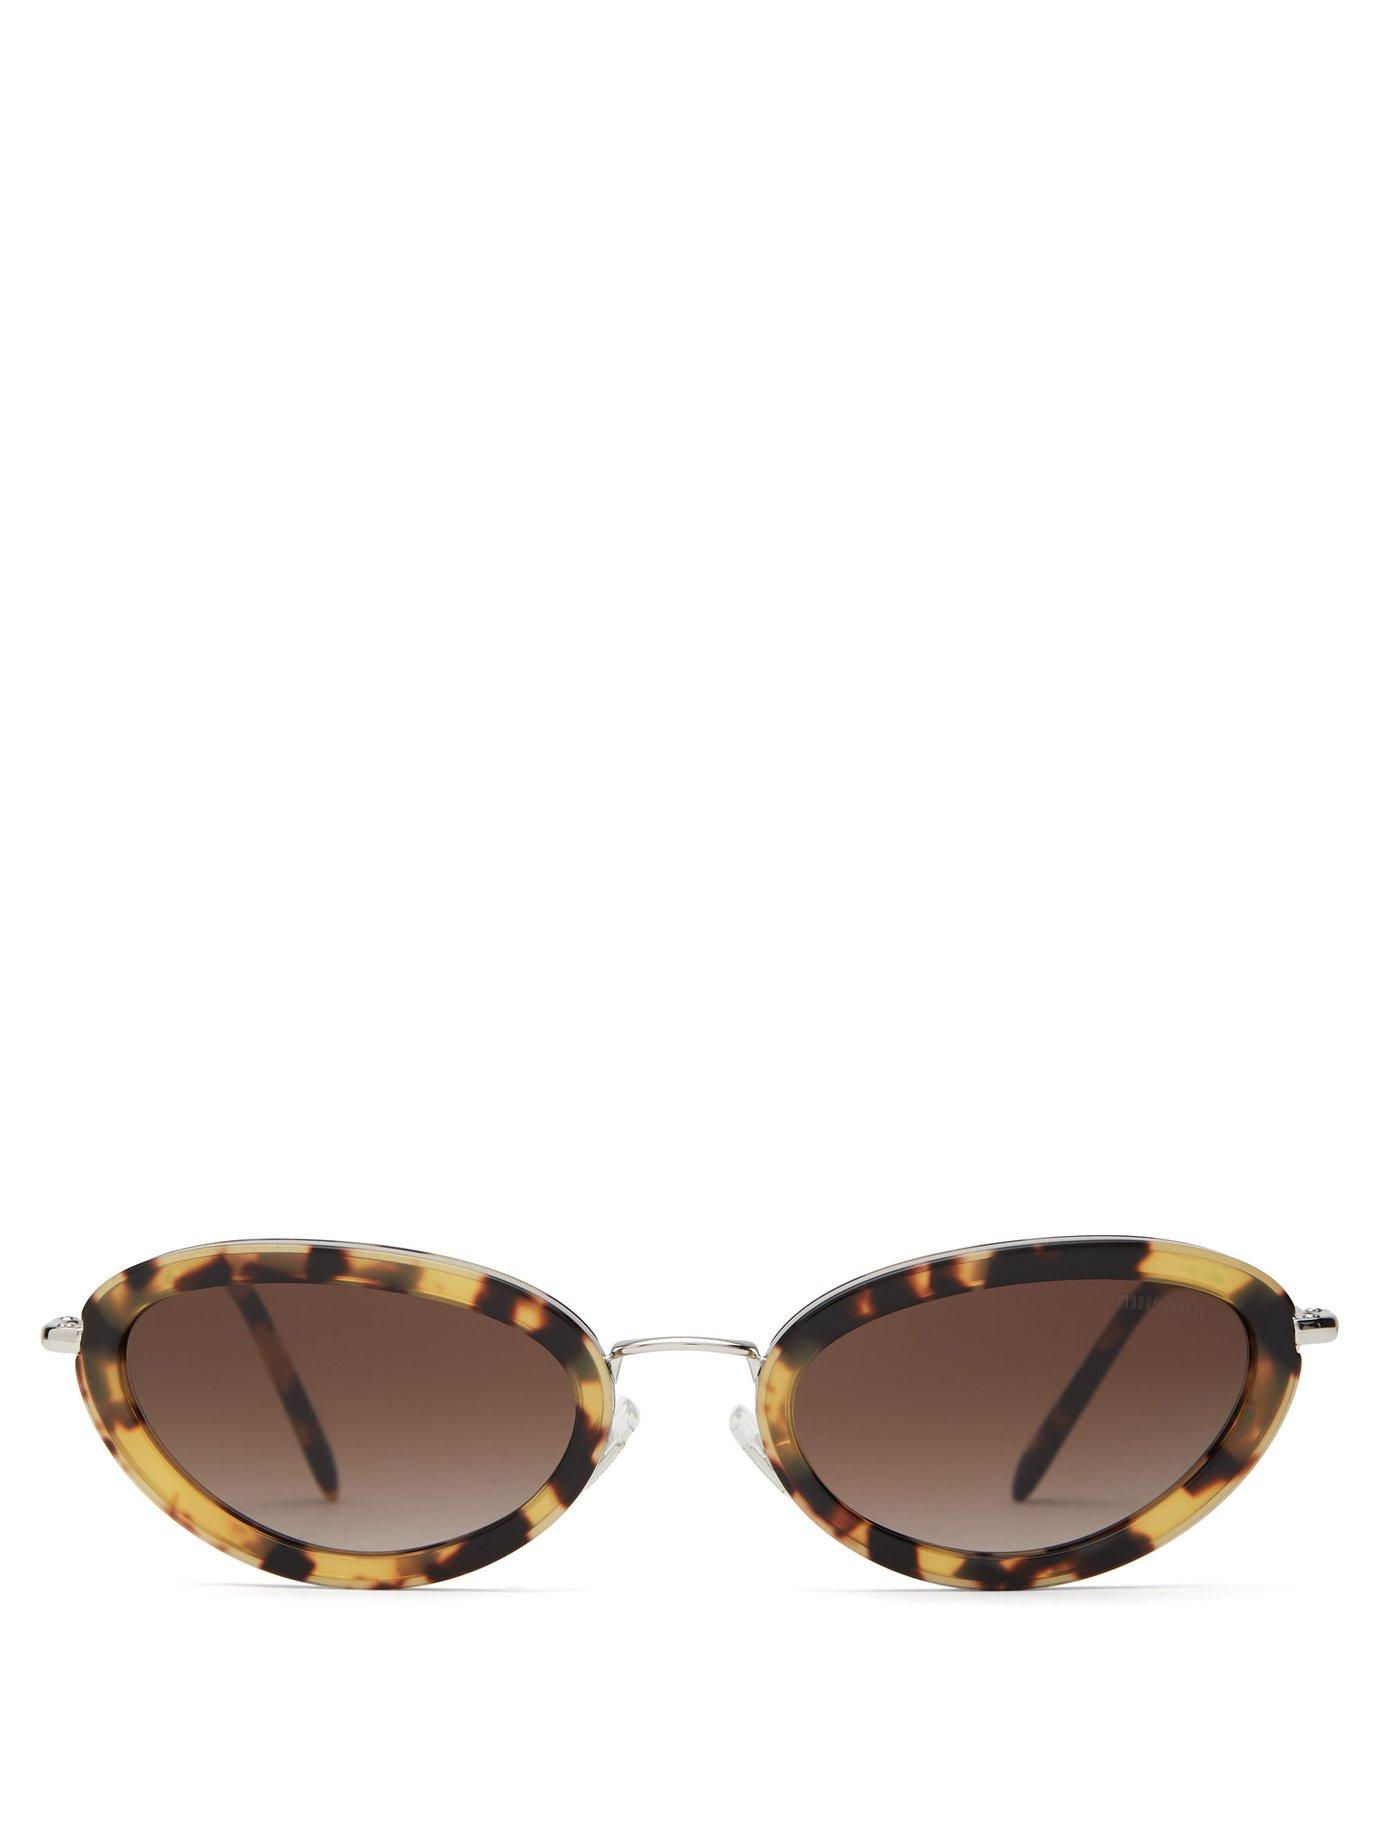 Miu Miu Délice Tortoiseshell Acetate Oval Sunglasses in Brown - Lyst